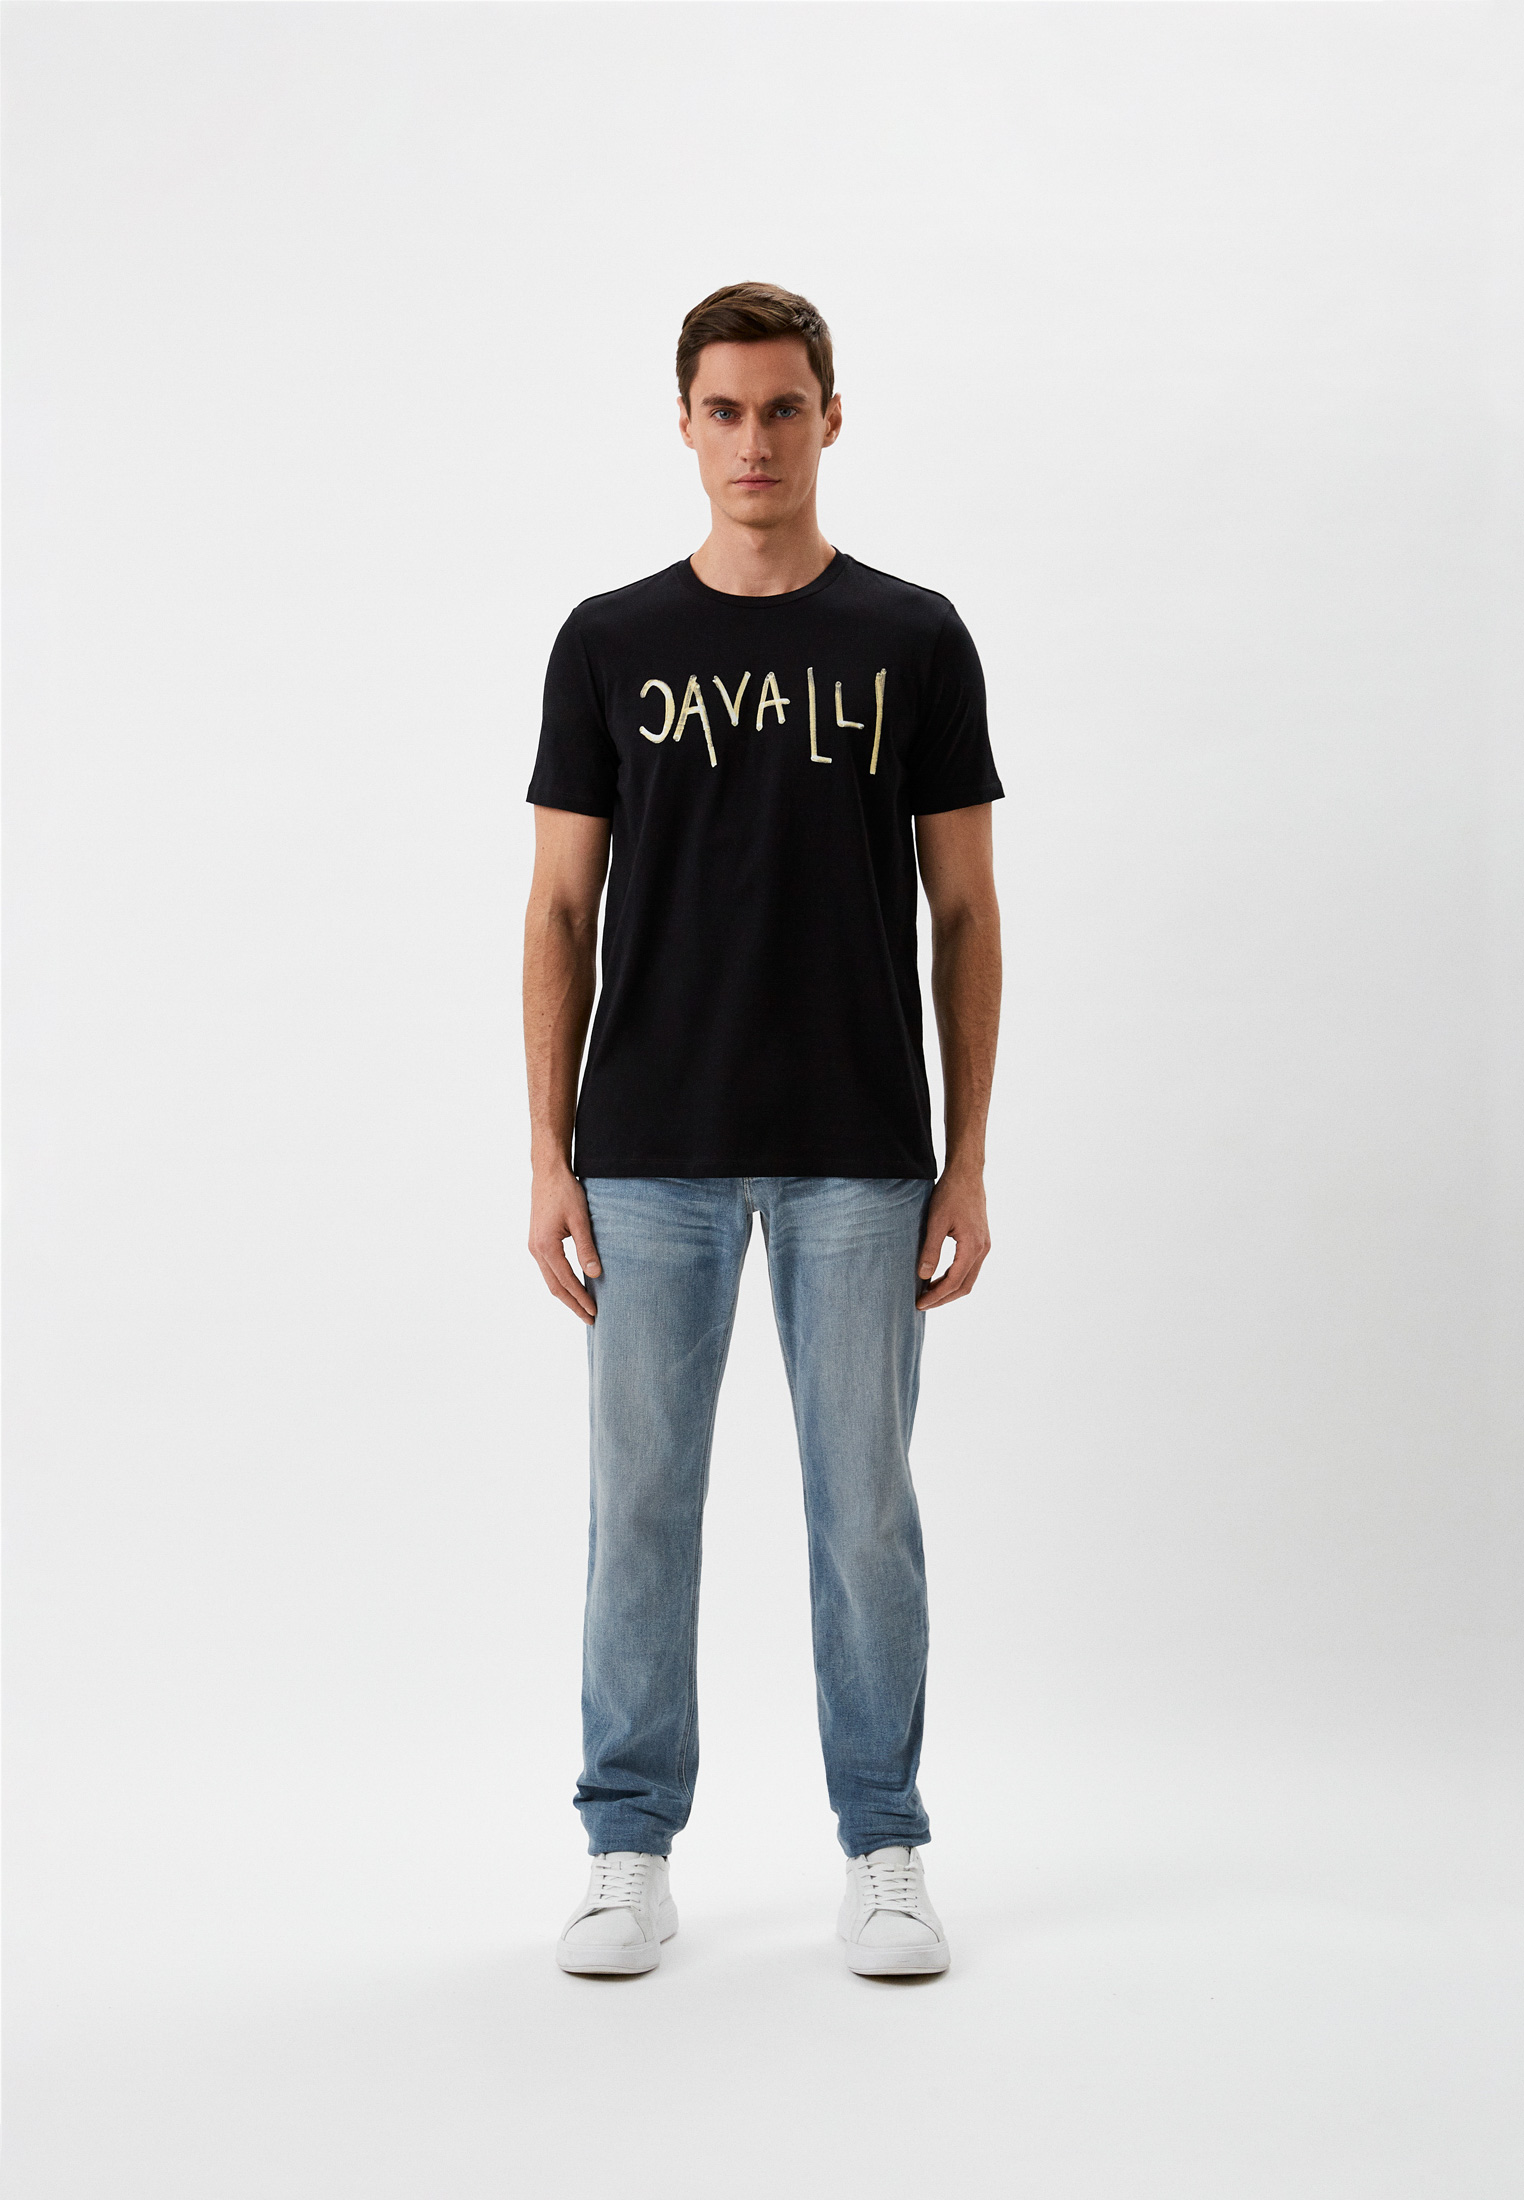 Мужская футболка Roberto Cavalli (Роберто Кавалли) NNT60B-JD060: изображение 2